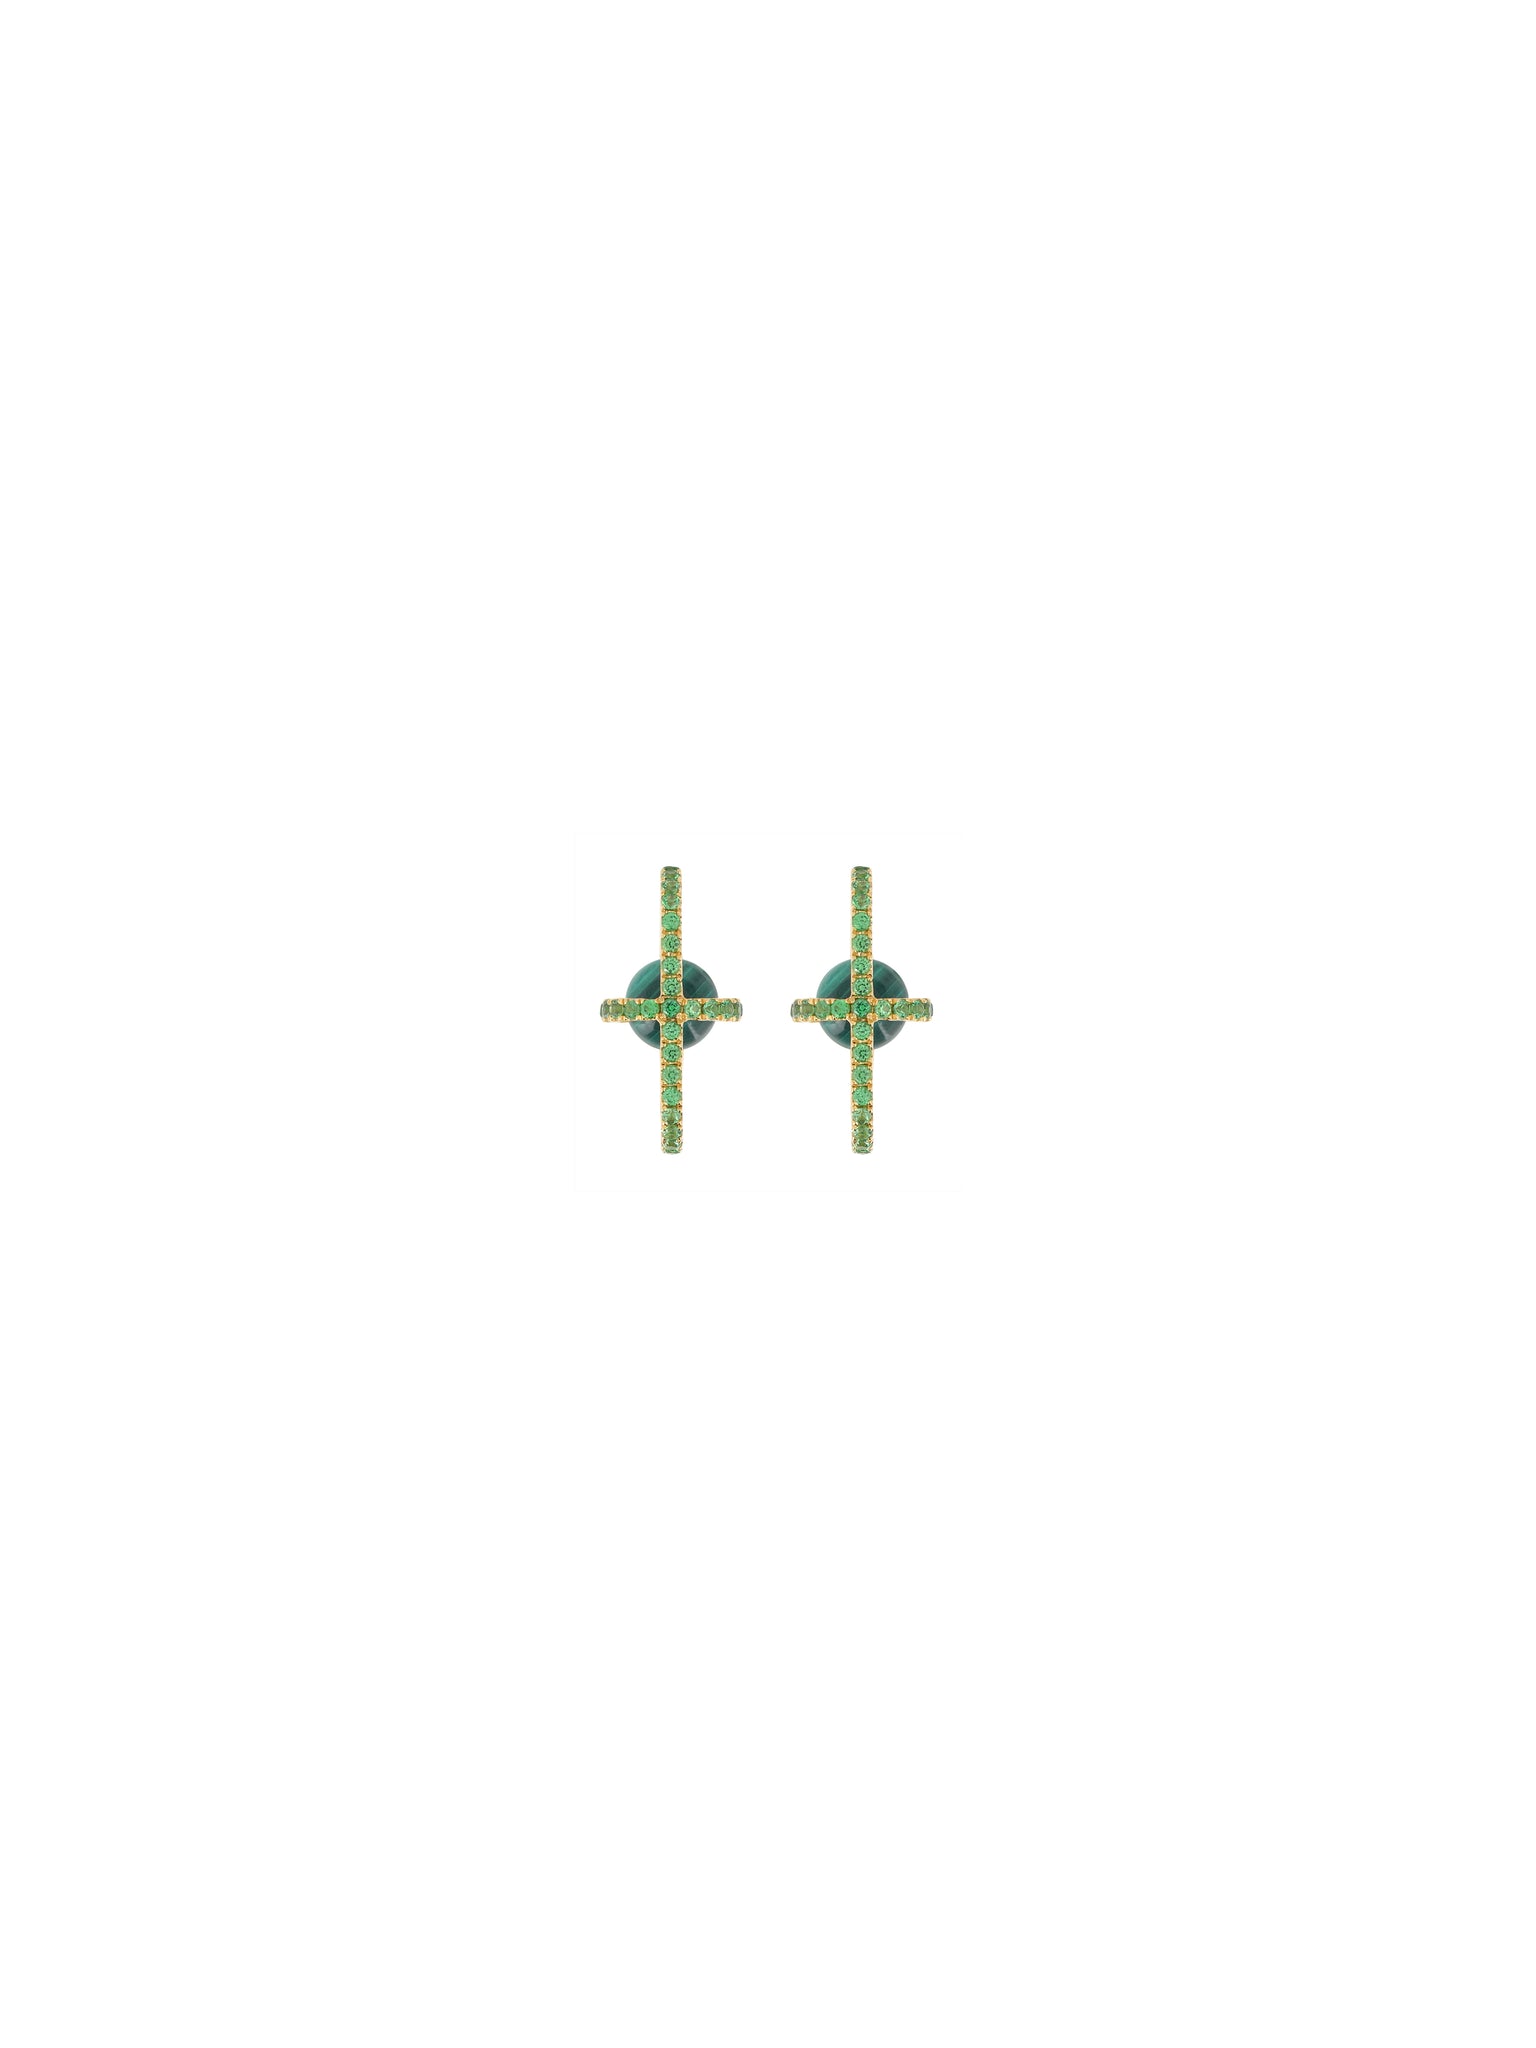 Allegory Pavé Green Stud Earrings